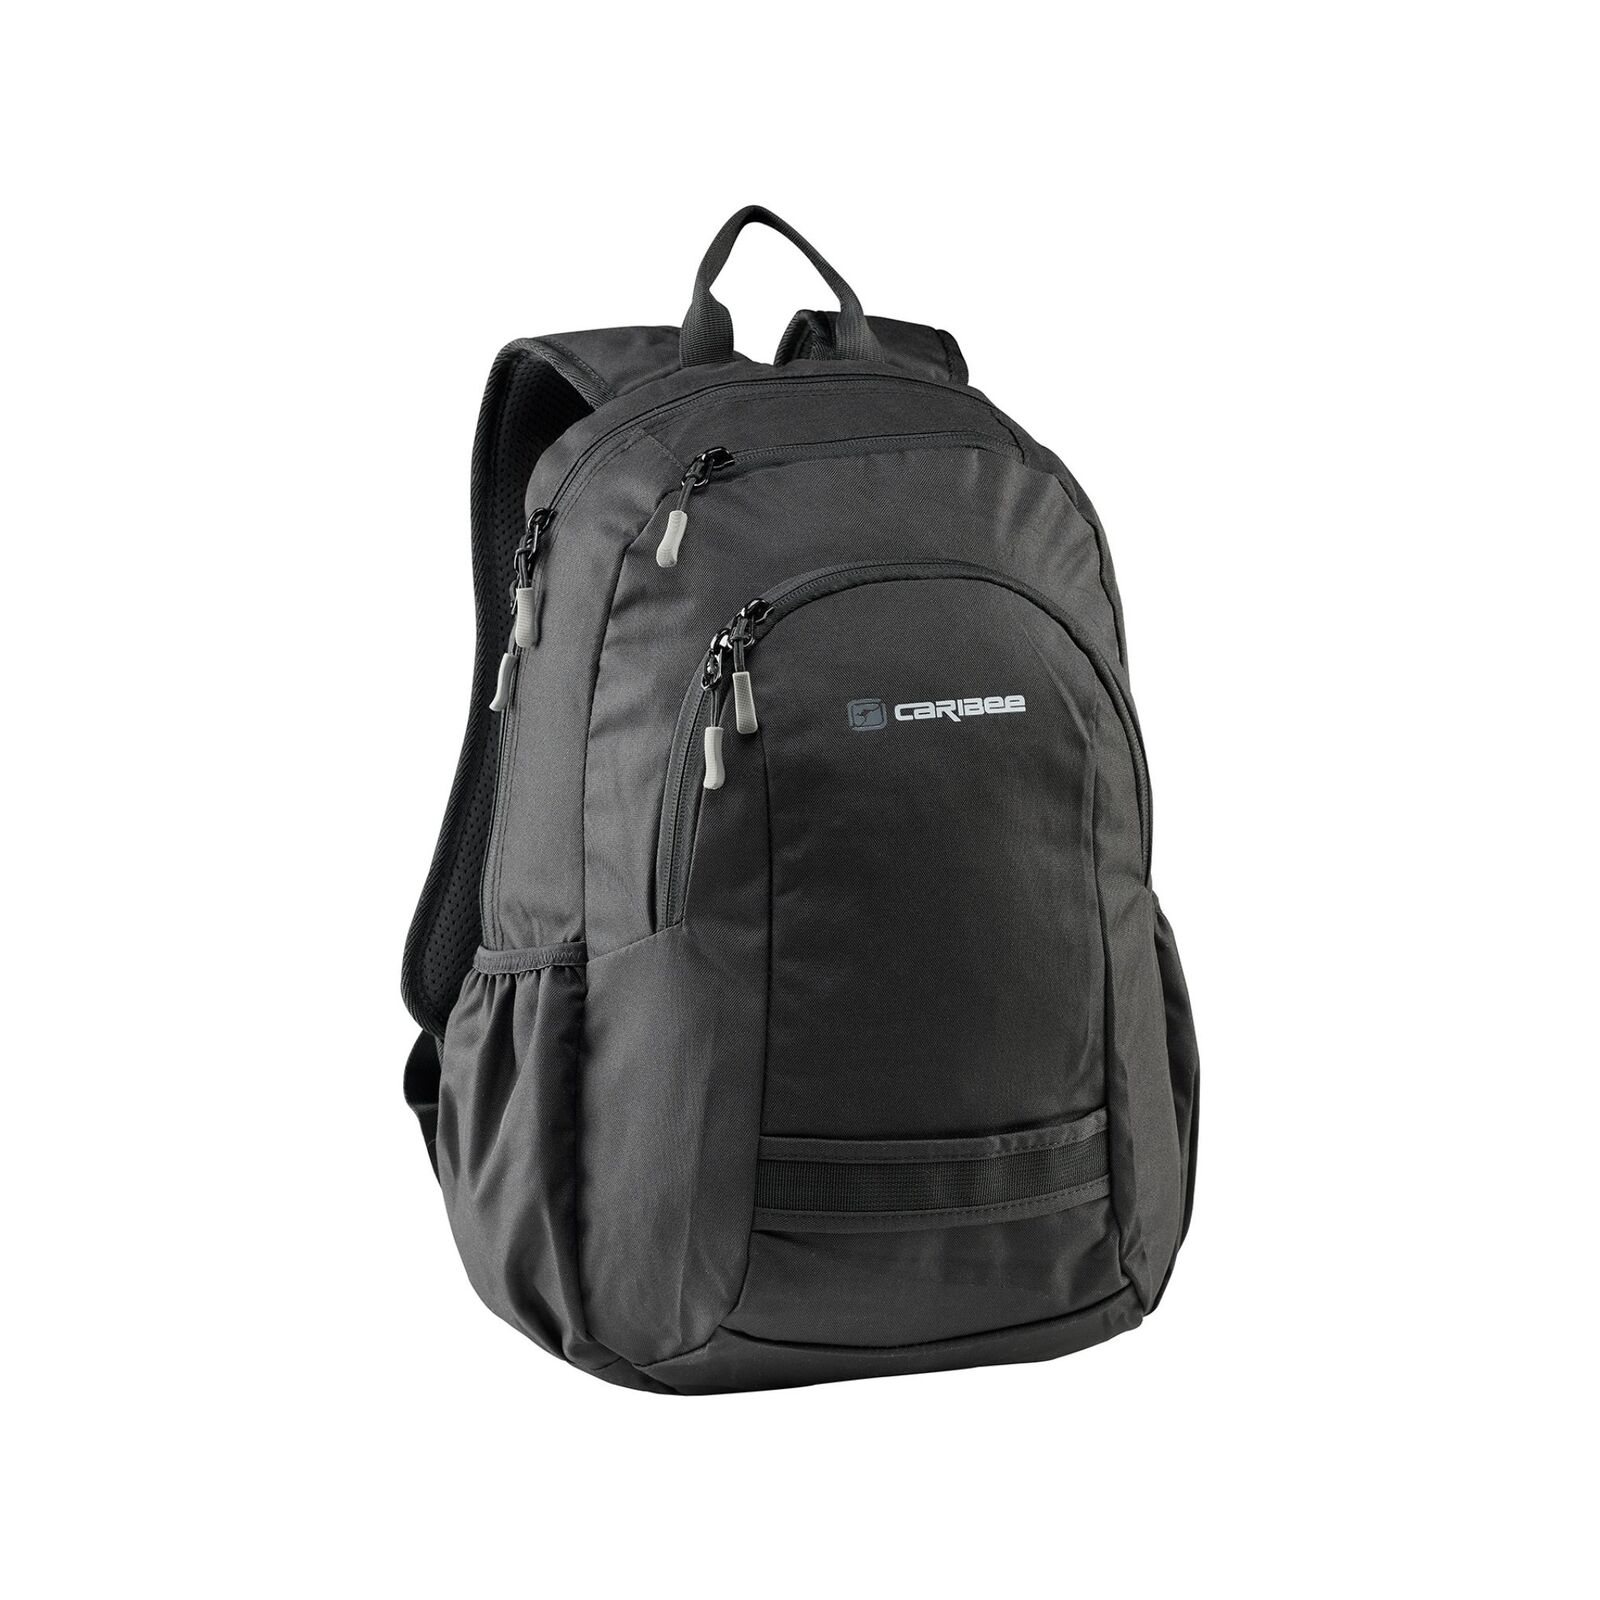 Caribee Nile 15.4inch Laptop Backpack Black 6423 - Bunnings Australia